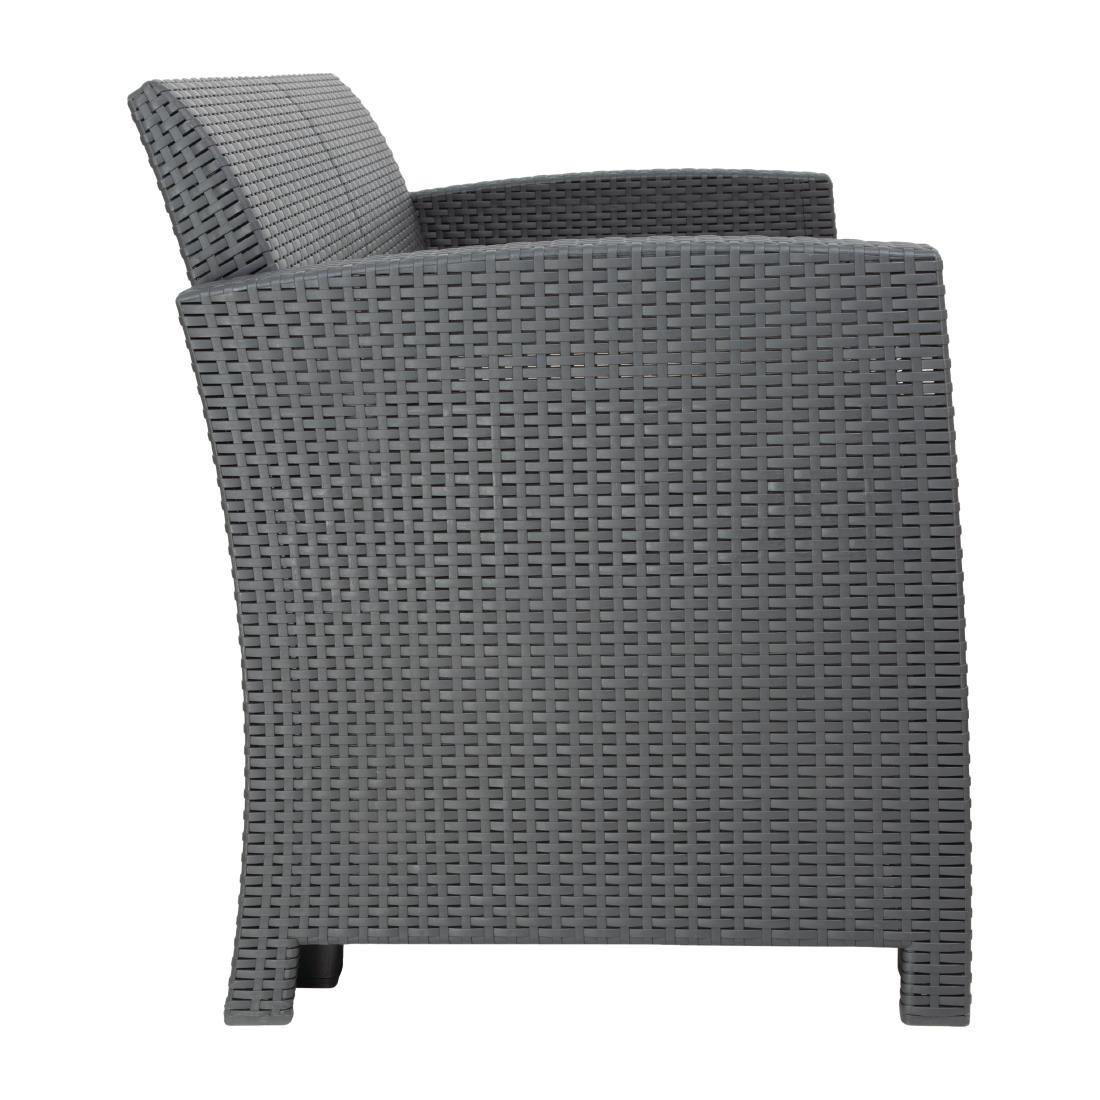 Bolero PP Armchair and Table Wicker Set Grey - DR309  - 3